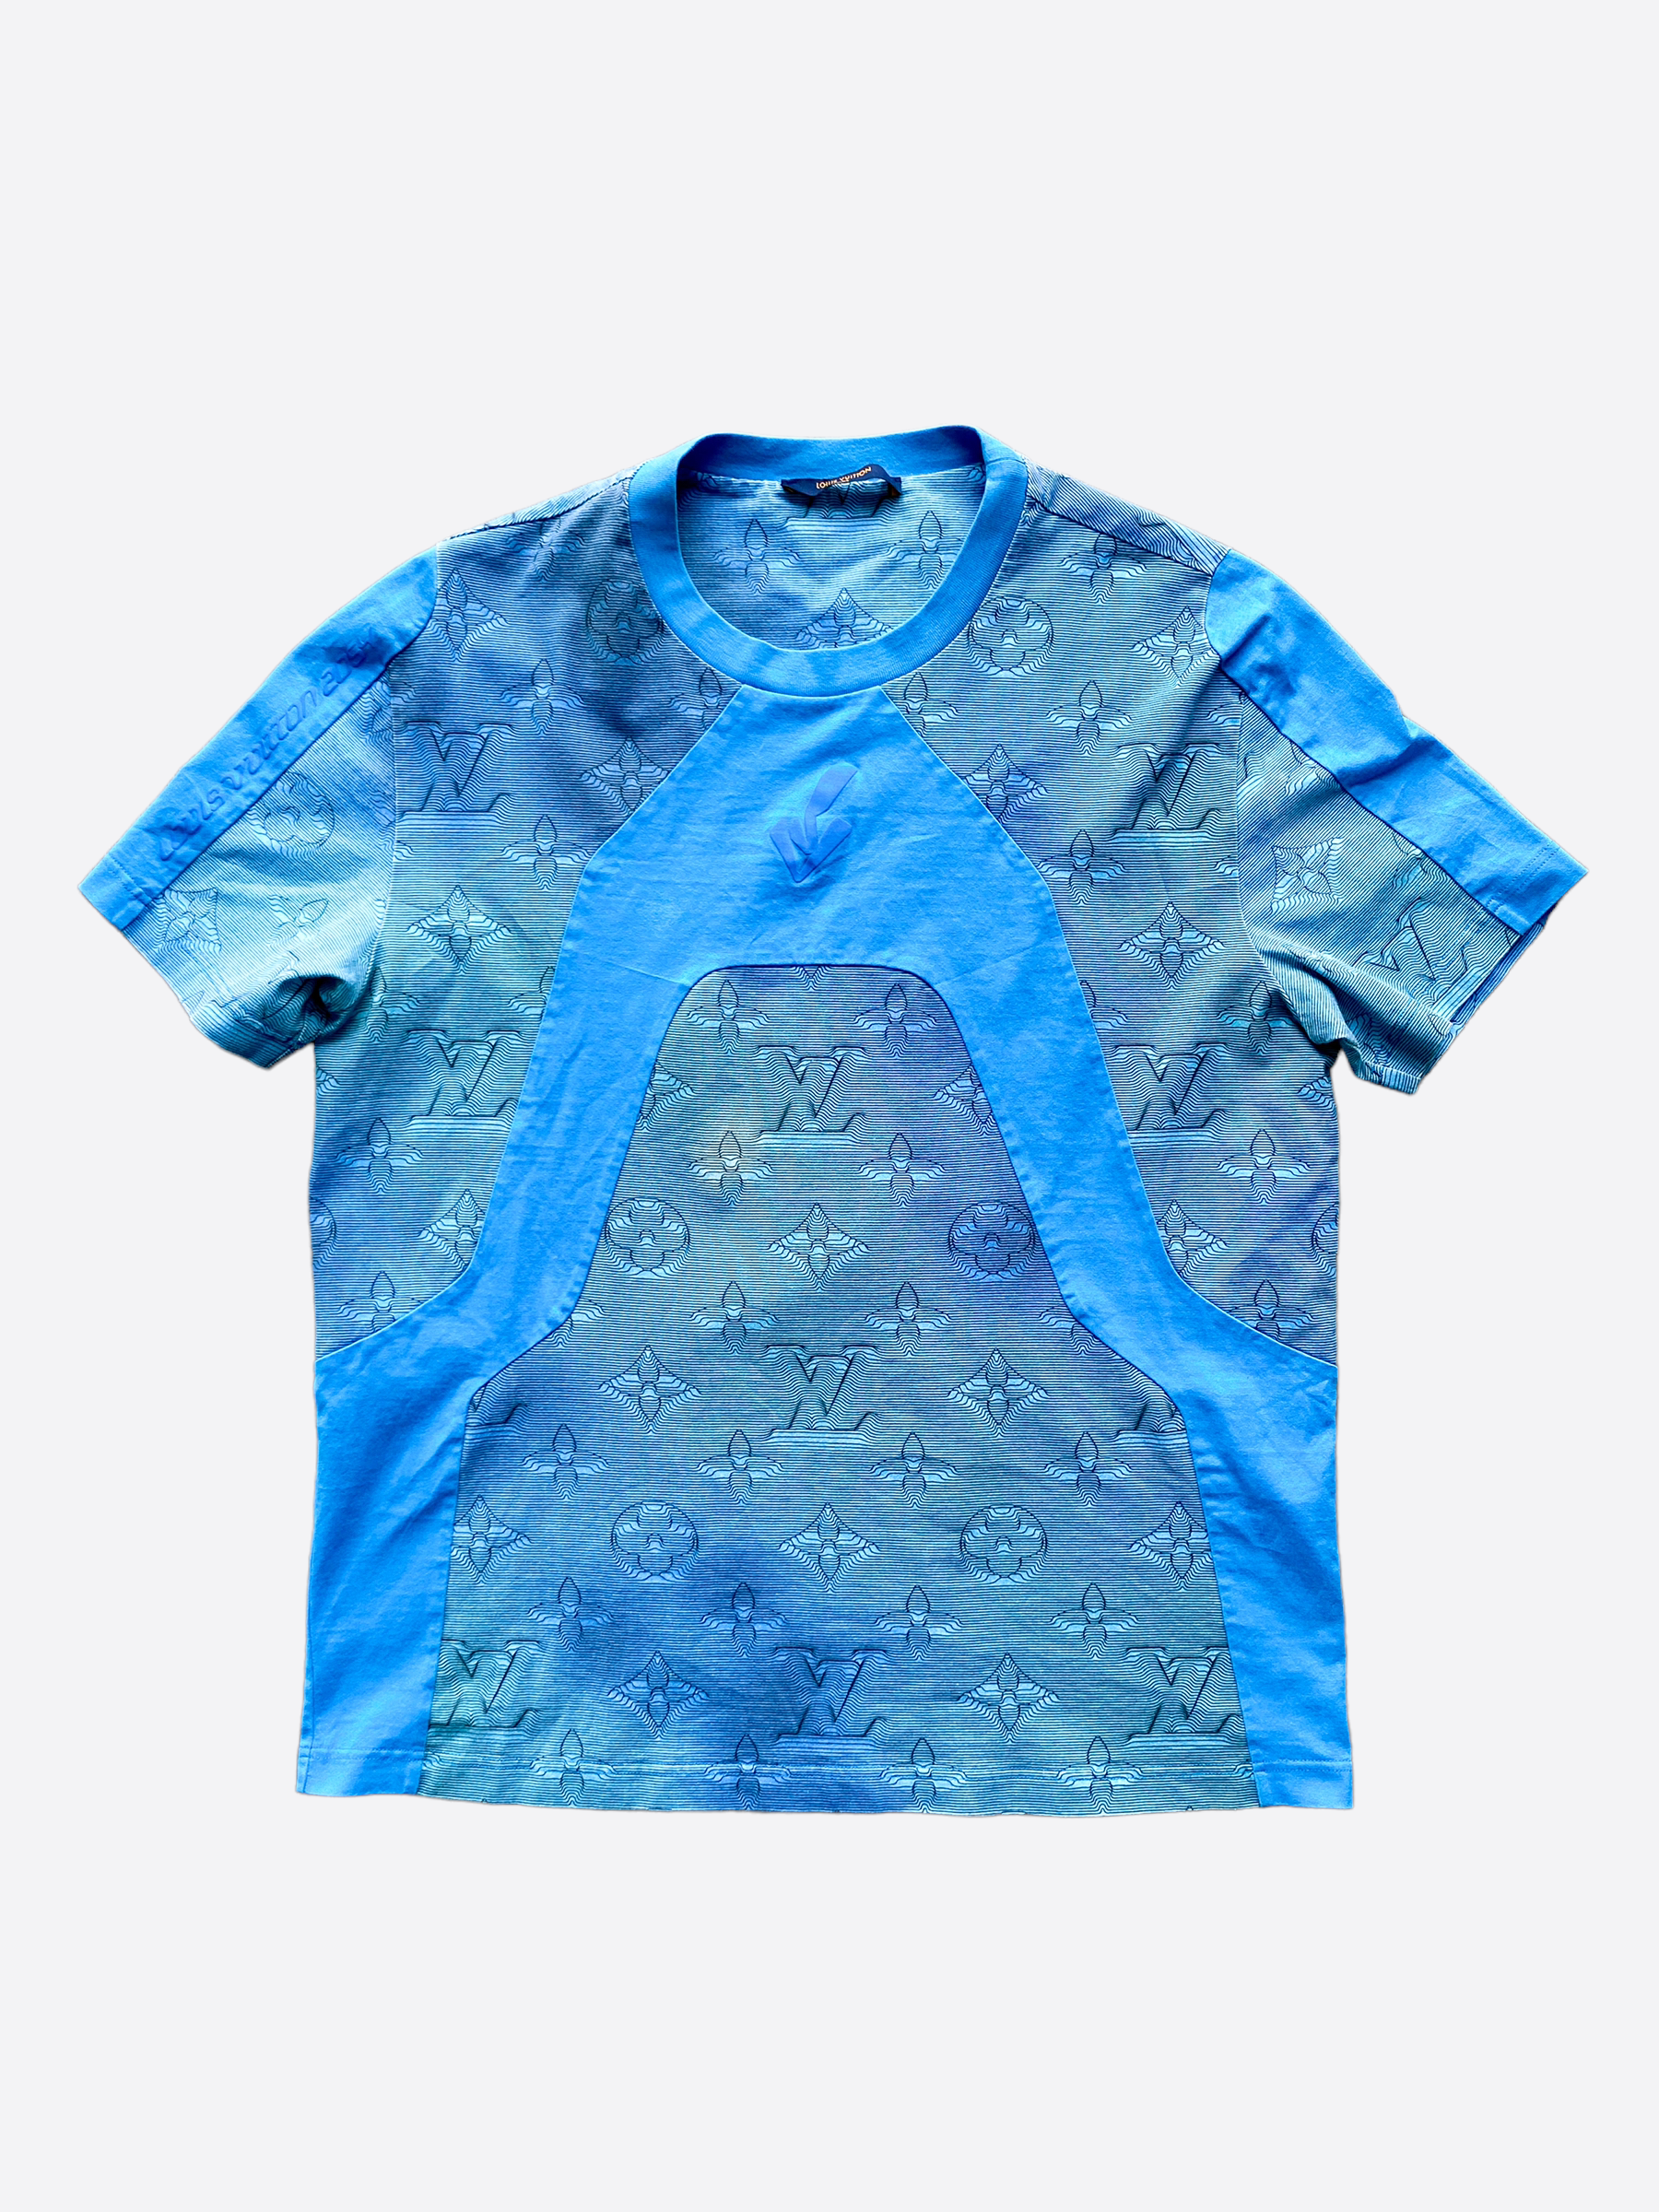 Louis 4 Vuitton T-Shirt - Luxury Blue